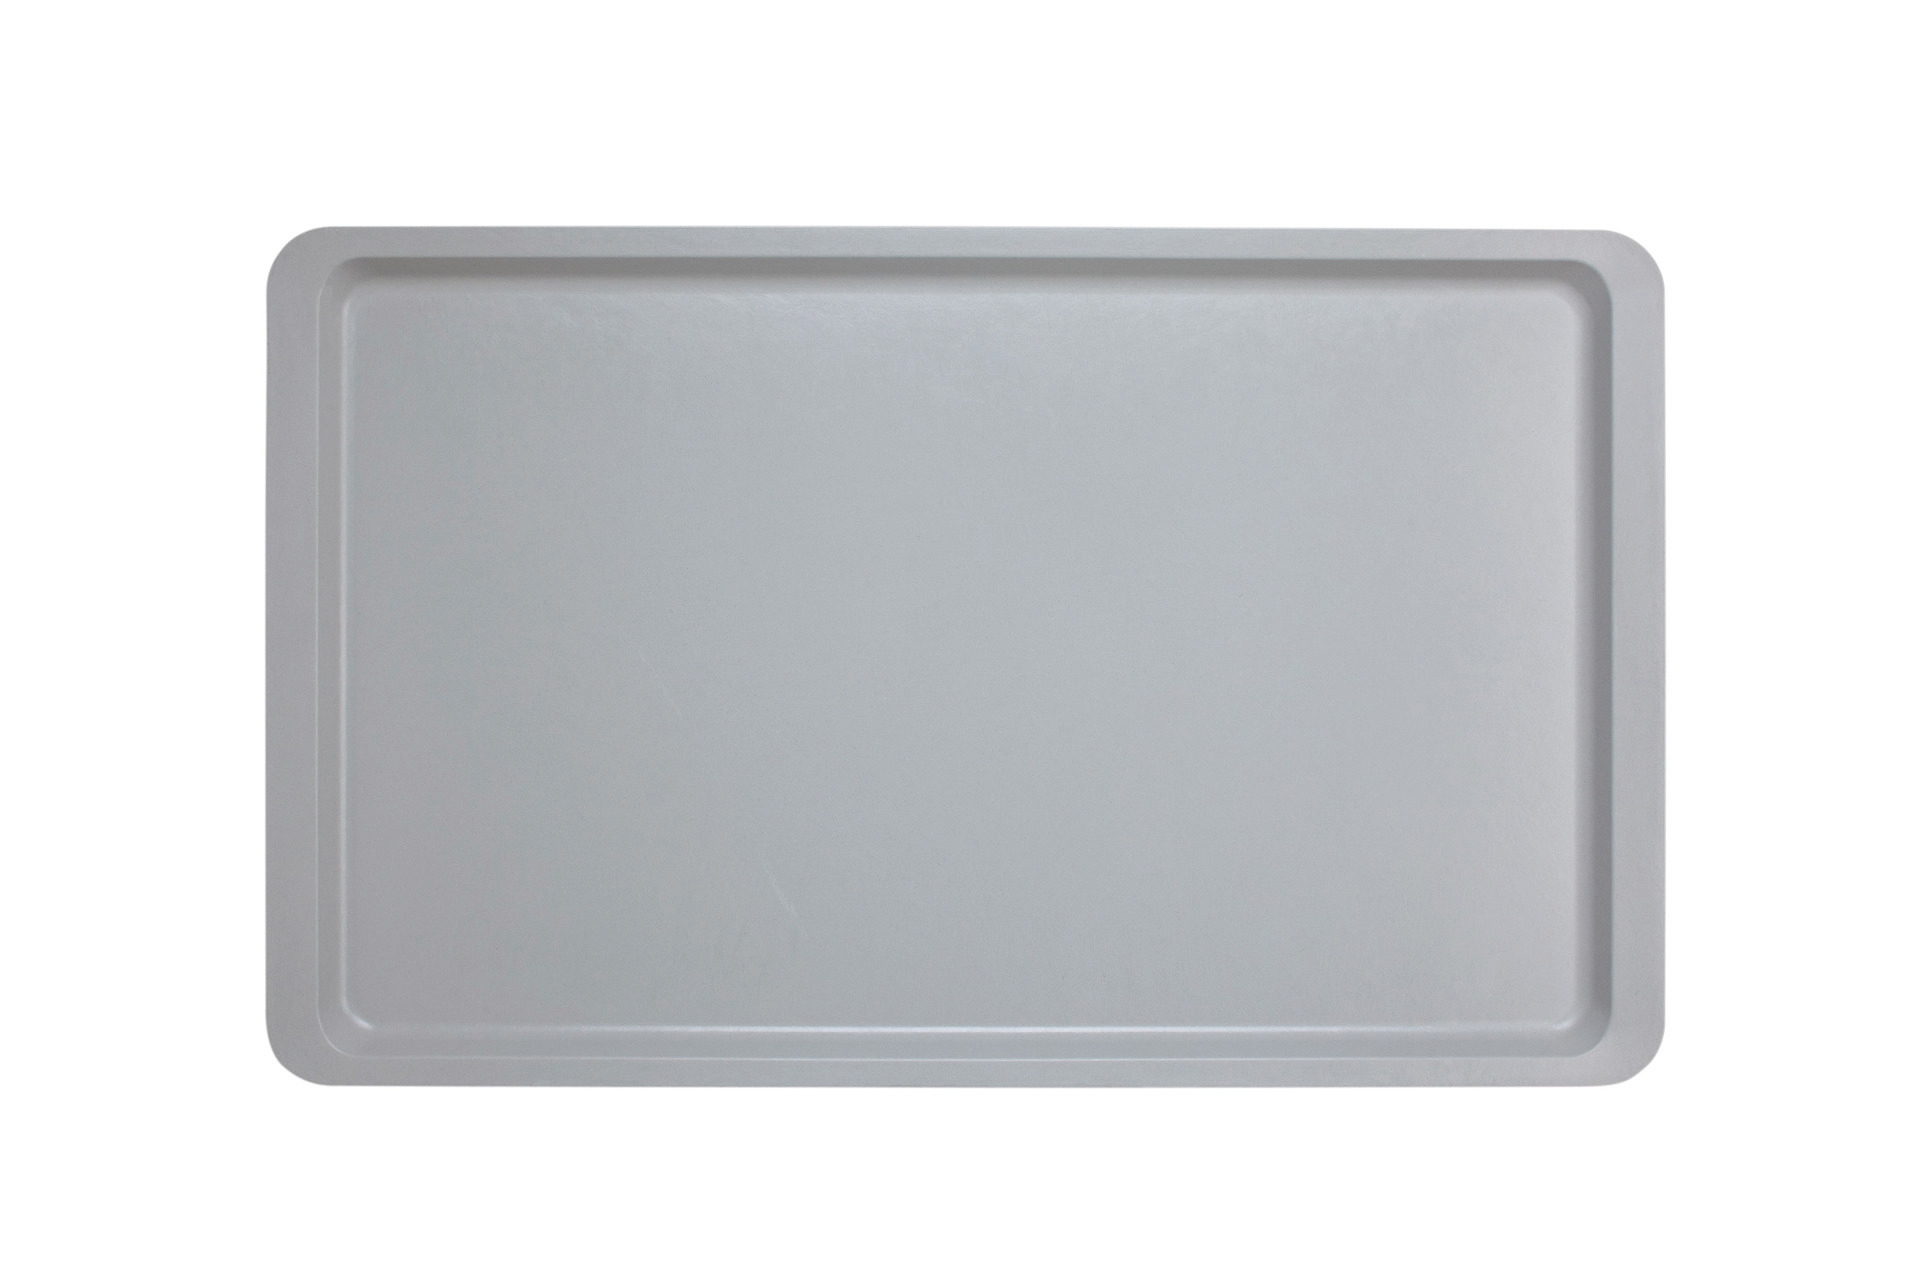 GN-Tablett Polyester Versa glatt GN 1/2 325 x 265 mm lichtgrau